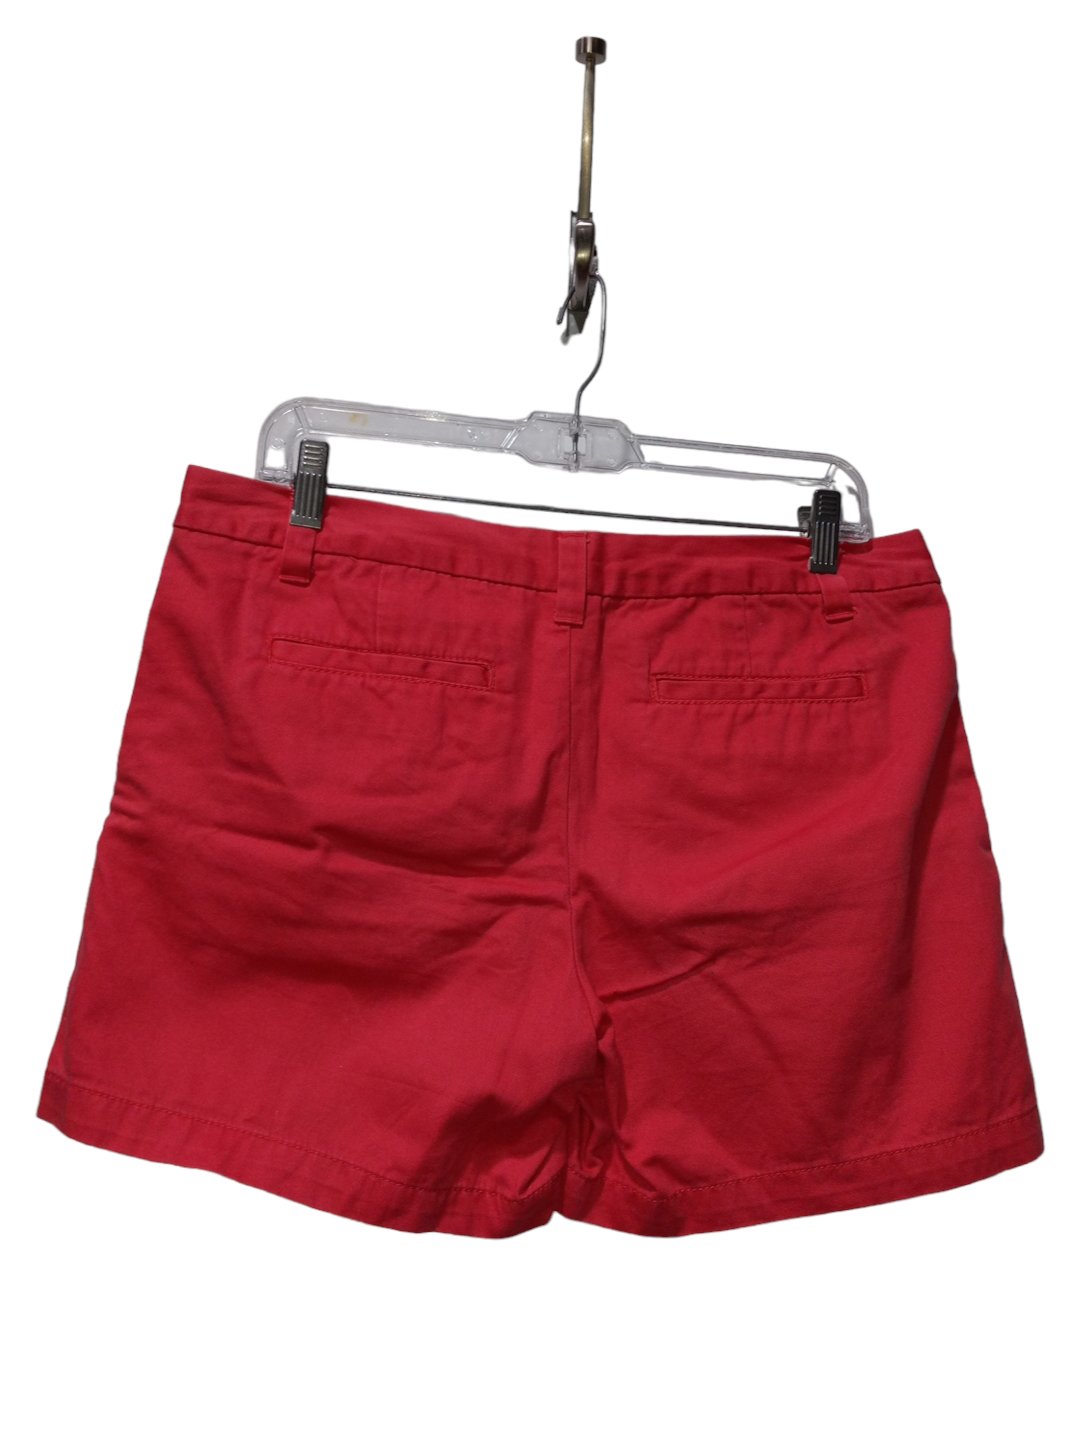 Red Shorts Merona, Size M